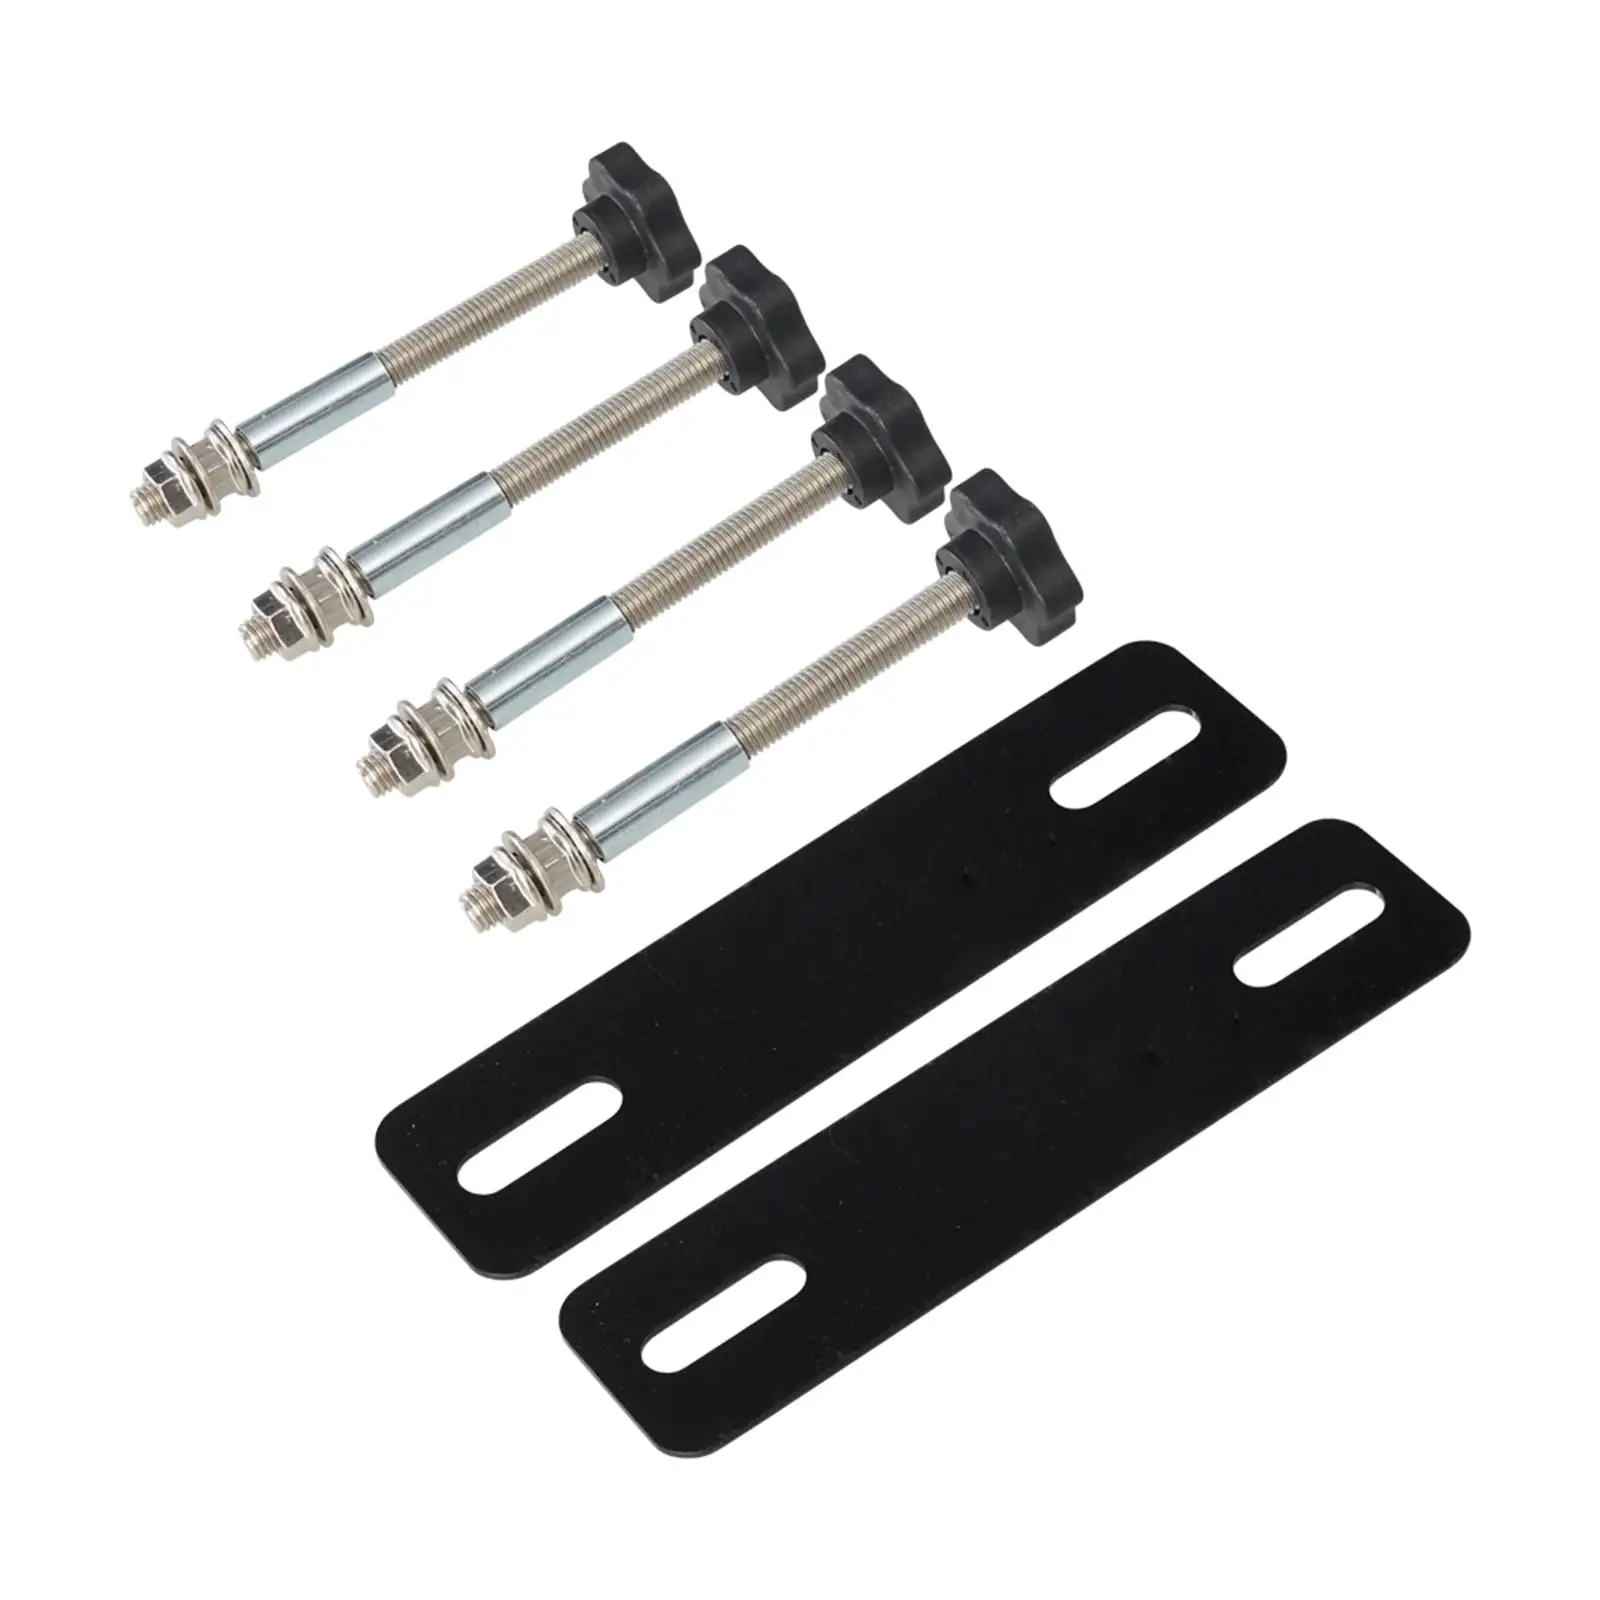 Mounting Pins Kits Hardware Professional Easy Installation Repair Parts